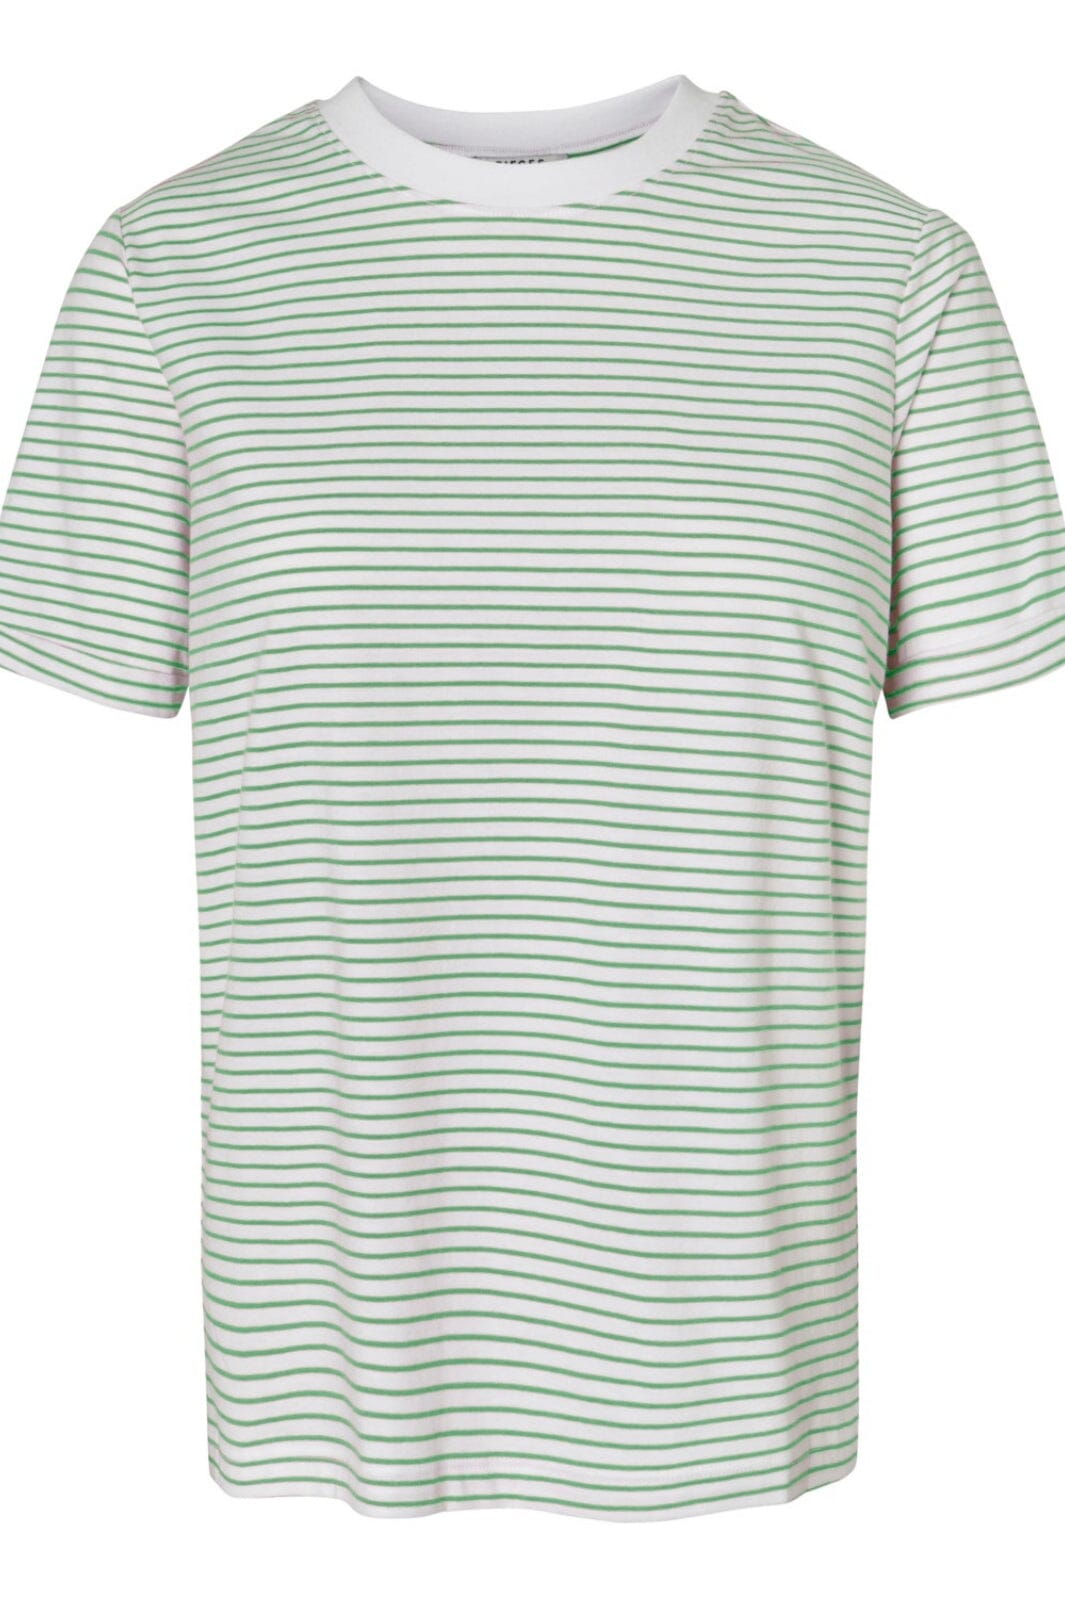 Pieces - Pcria Ss Fold Up Tee Stripes Bc - Bright White Stripes:Absinth Green 